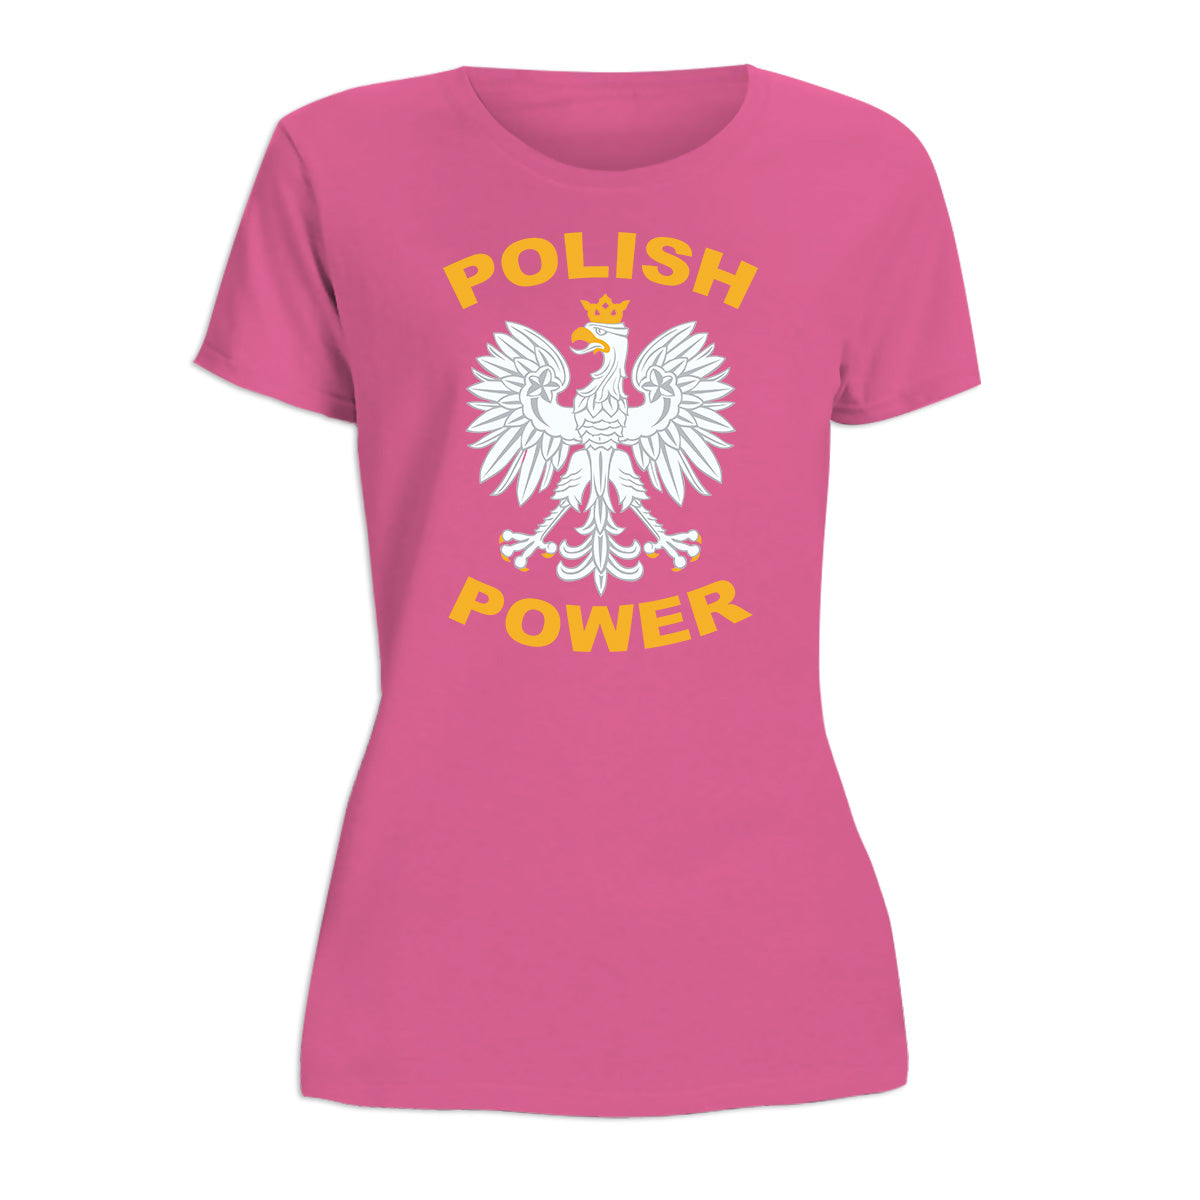 White Eagle Polish Power Women's Short Sleeve Tshirt